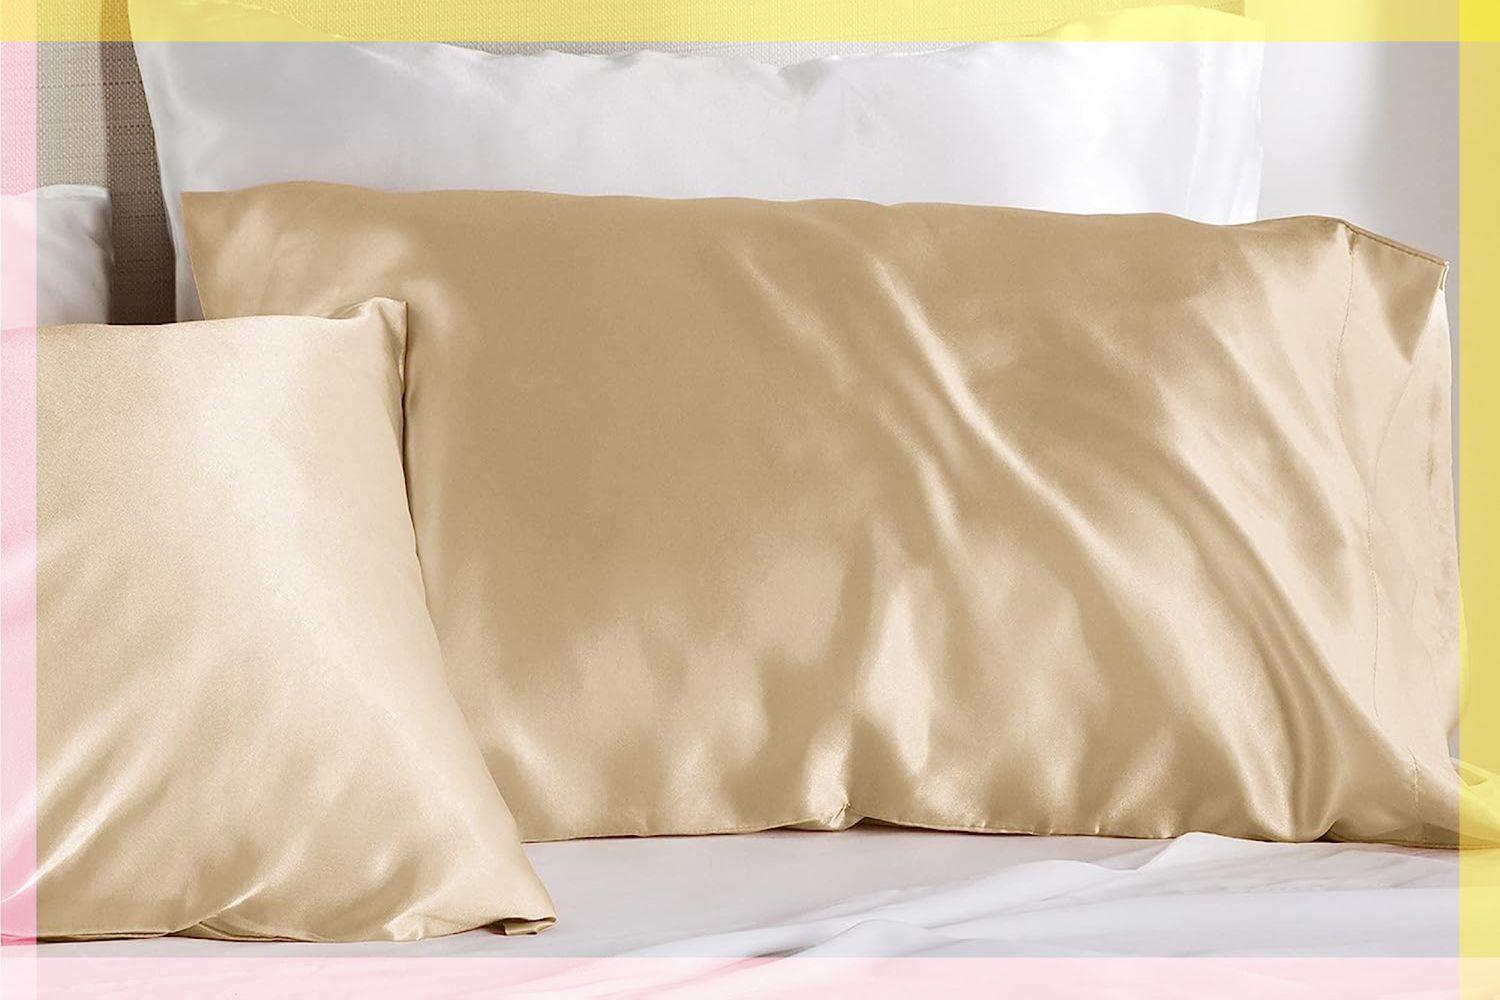 dropshipping products - Satin pillowcases